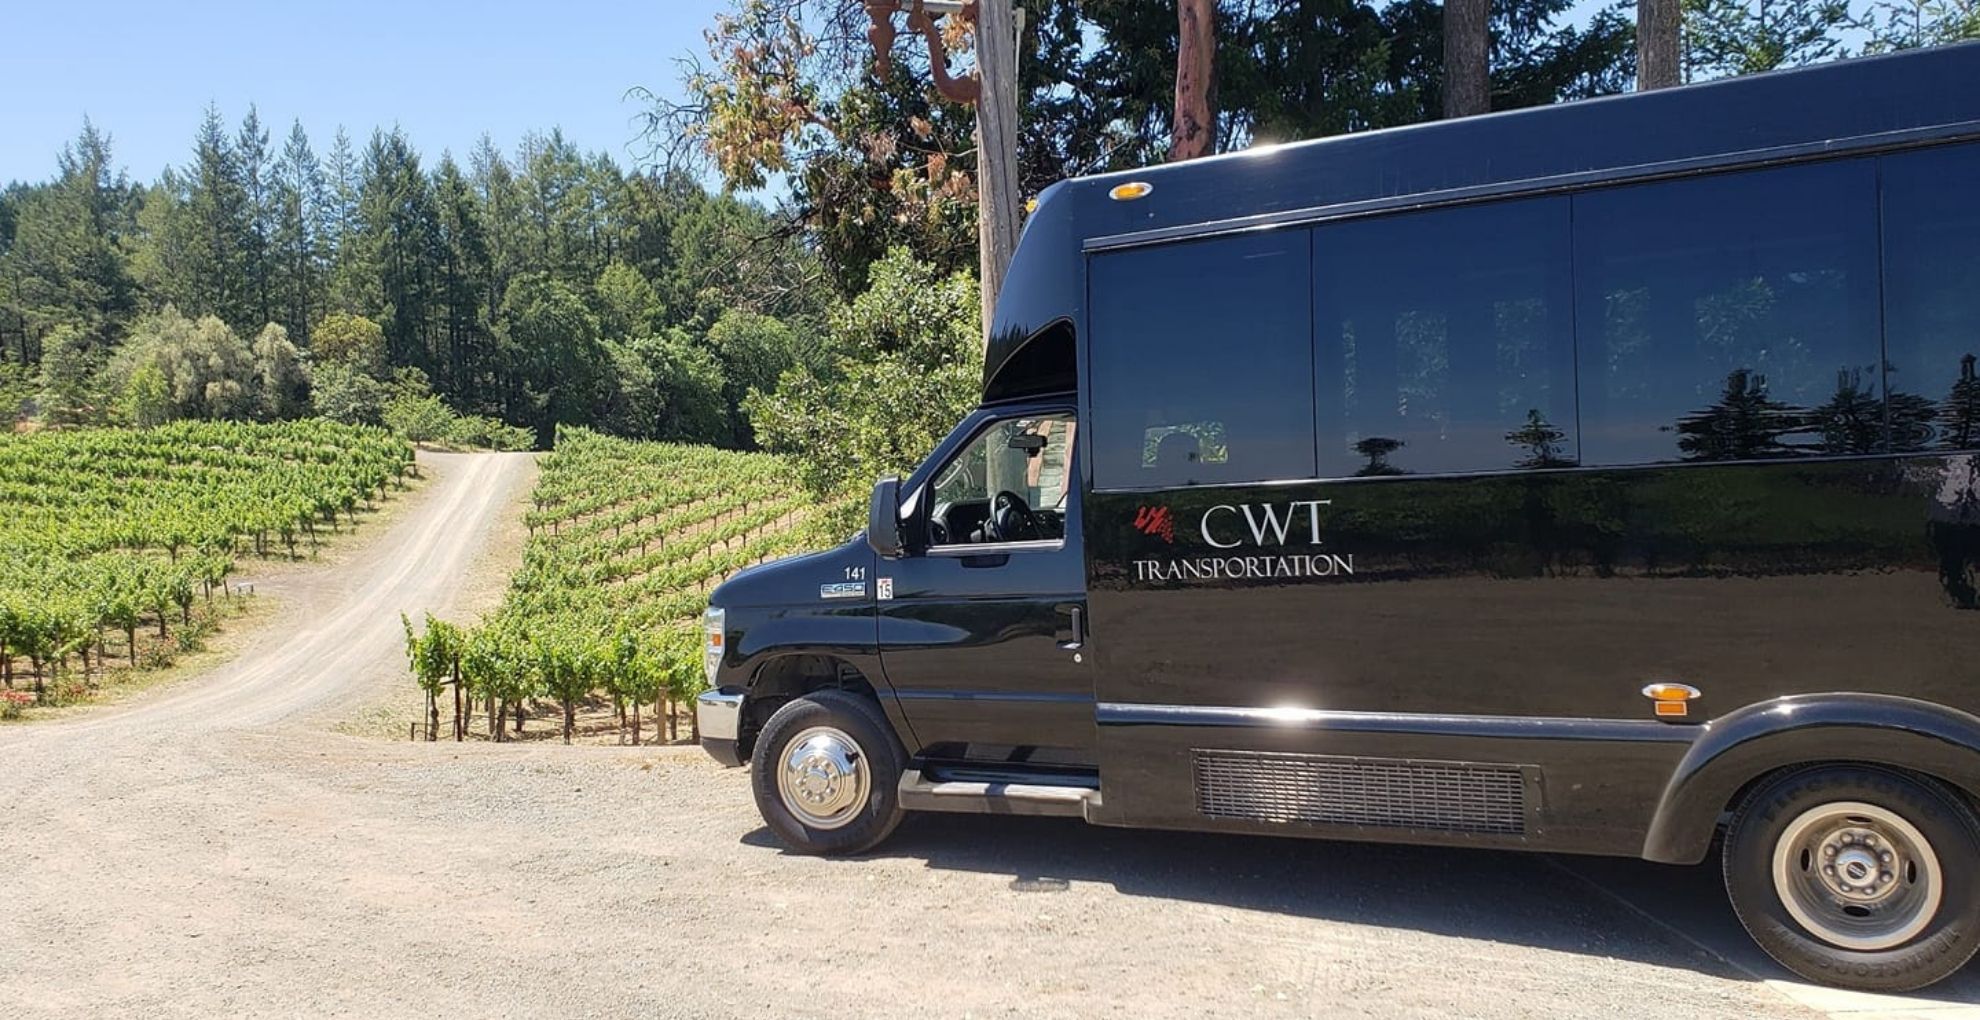 California Wine Tours